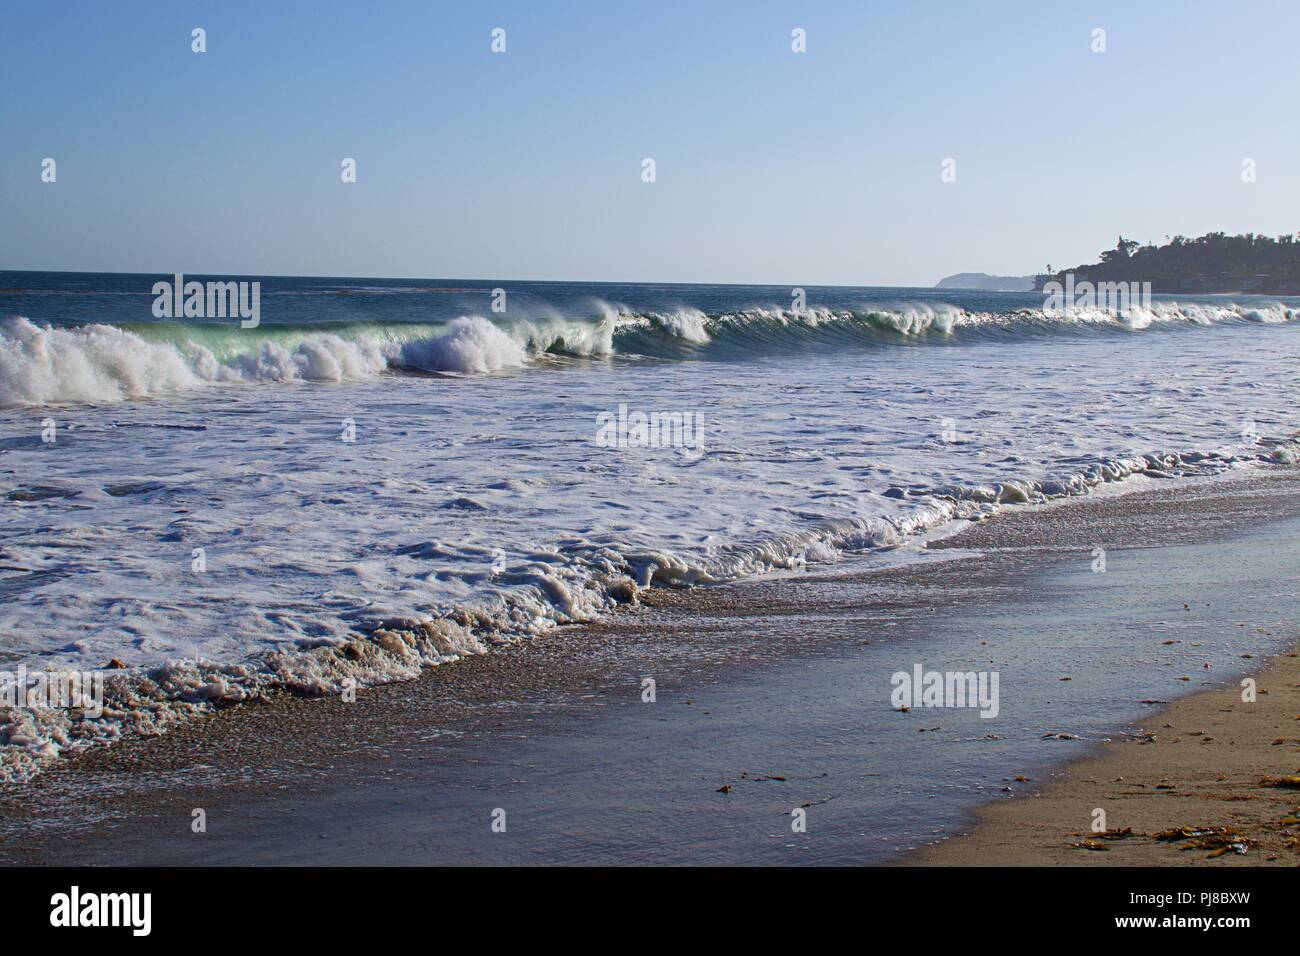 Morning at the beach in Malibu Stock Photo - Alamy